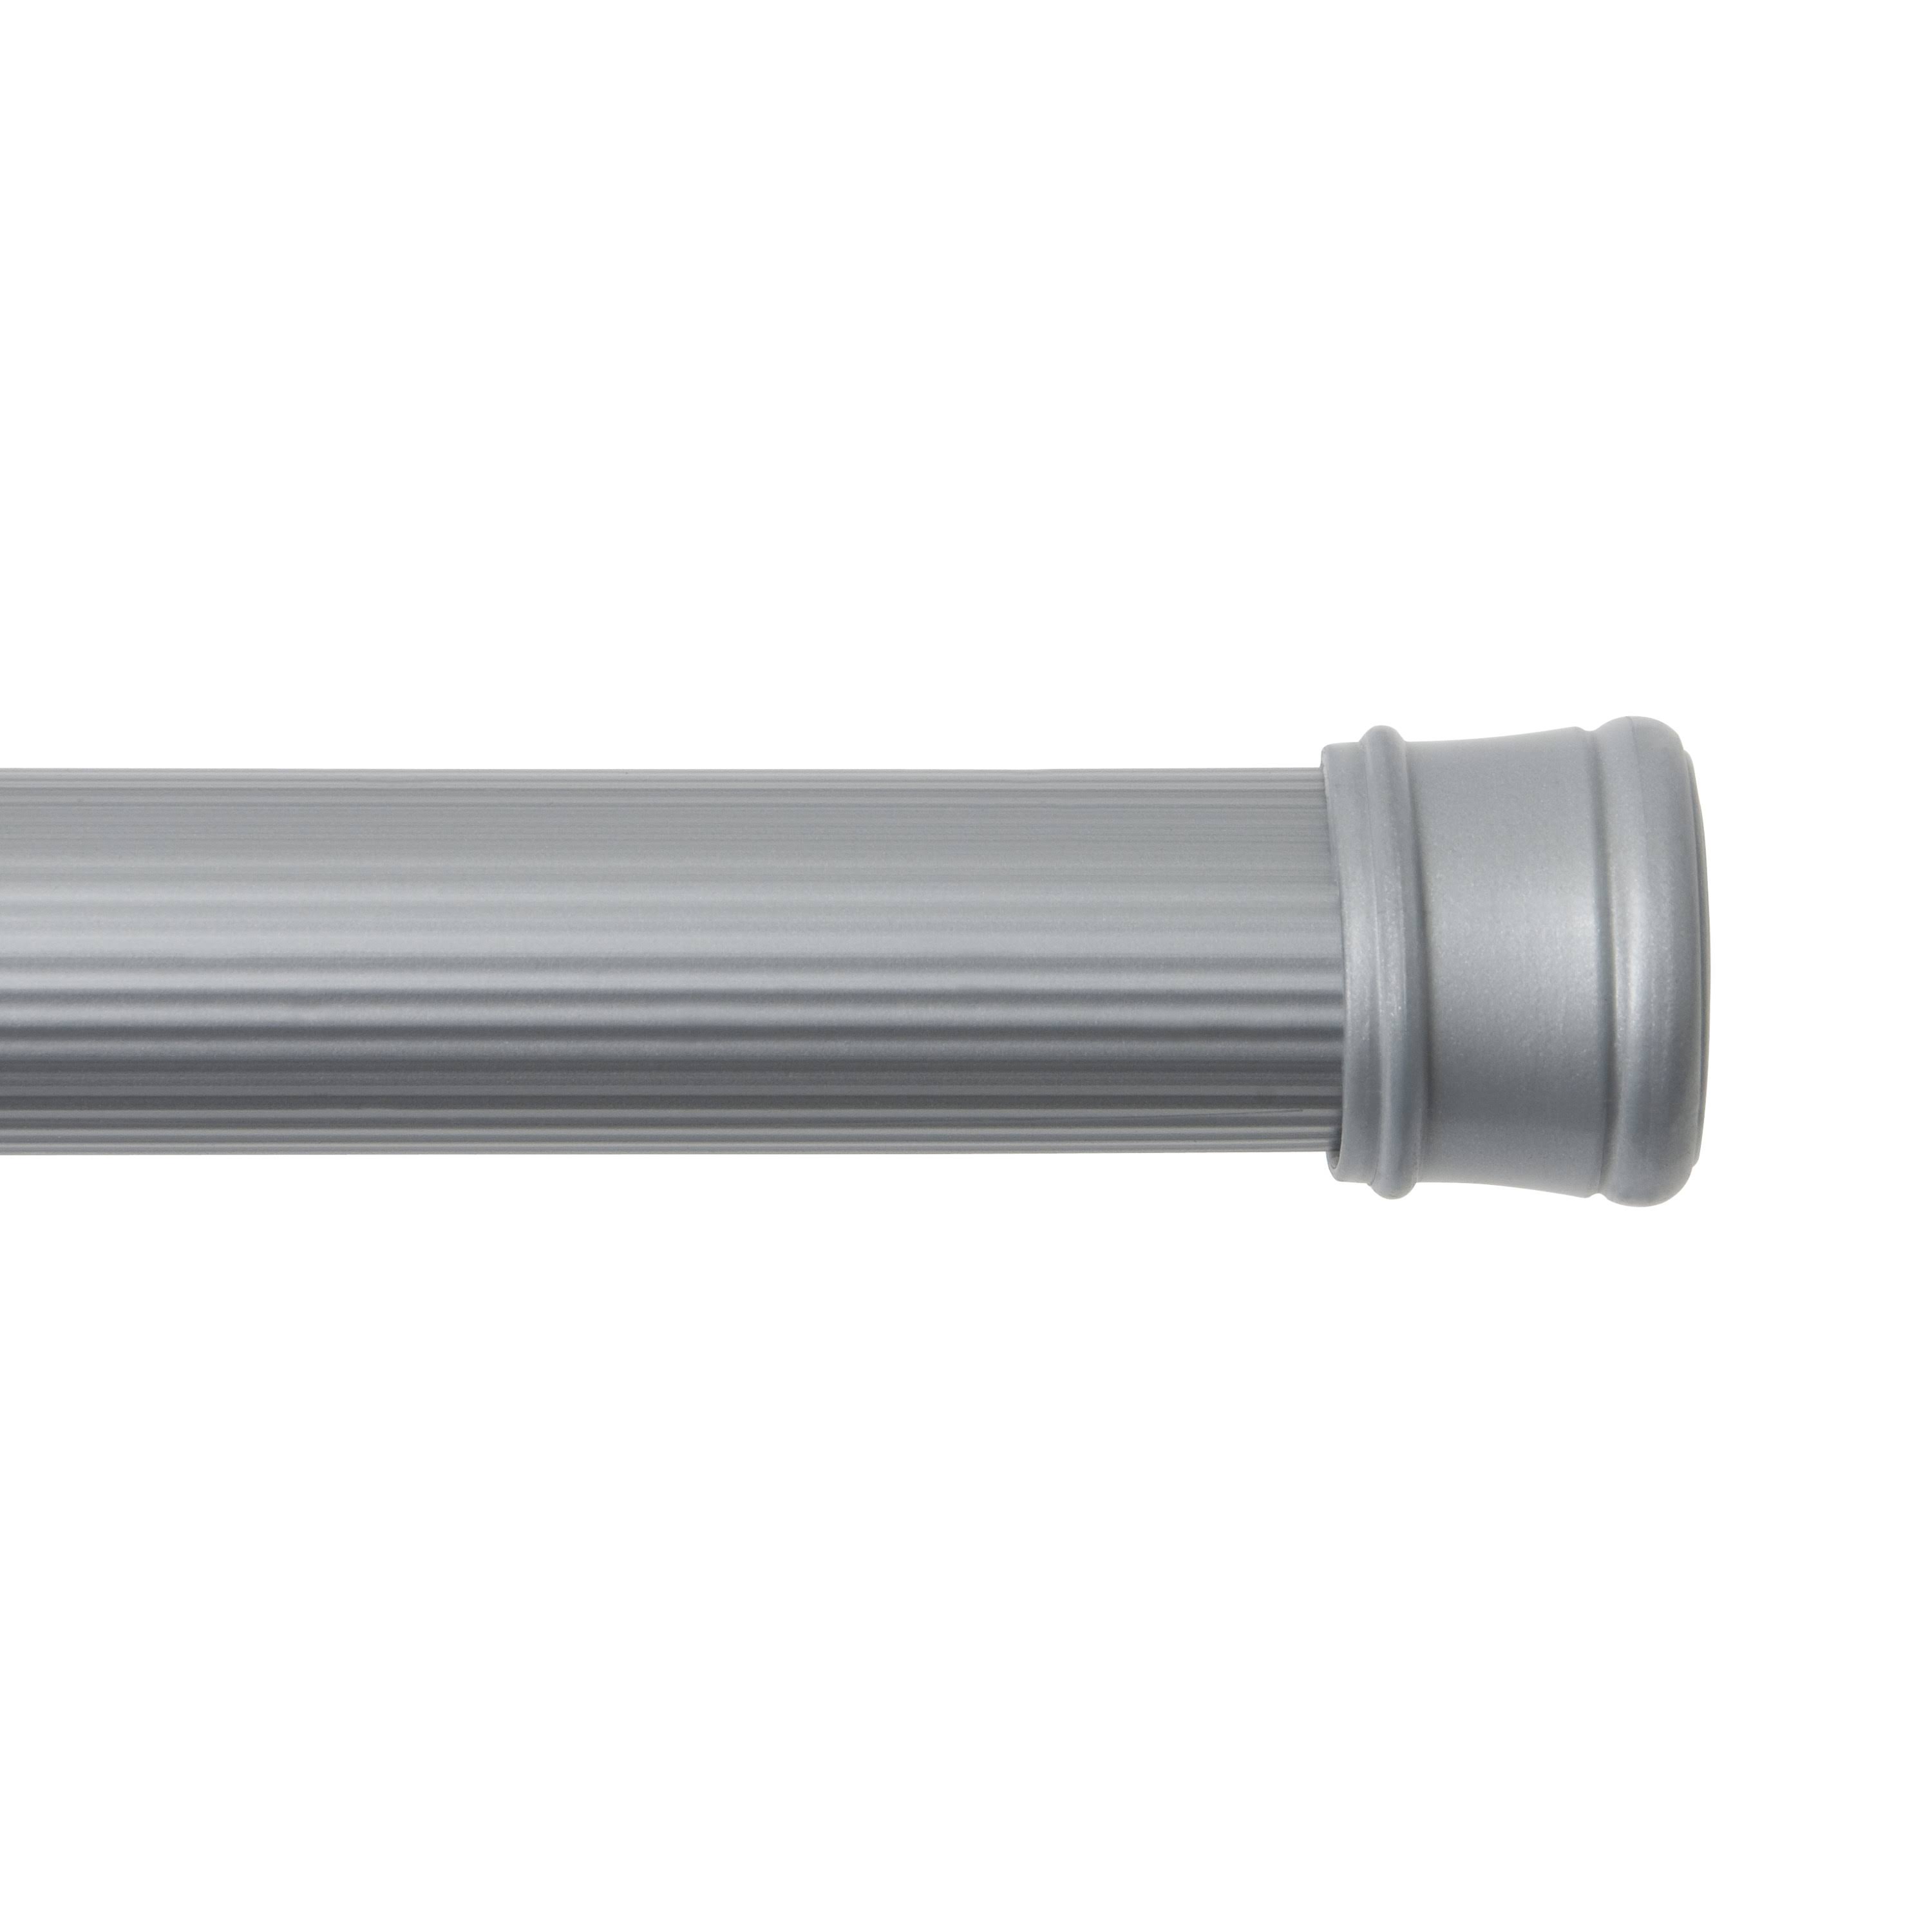 Kenney Spring Tension Shower & Utility Rod